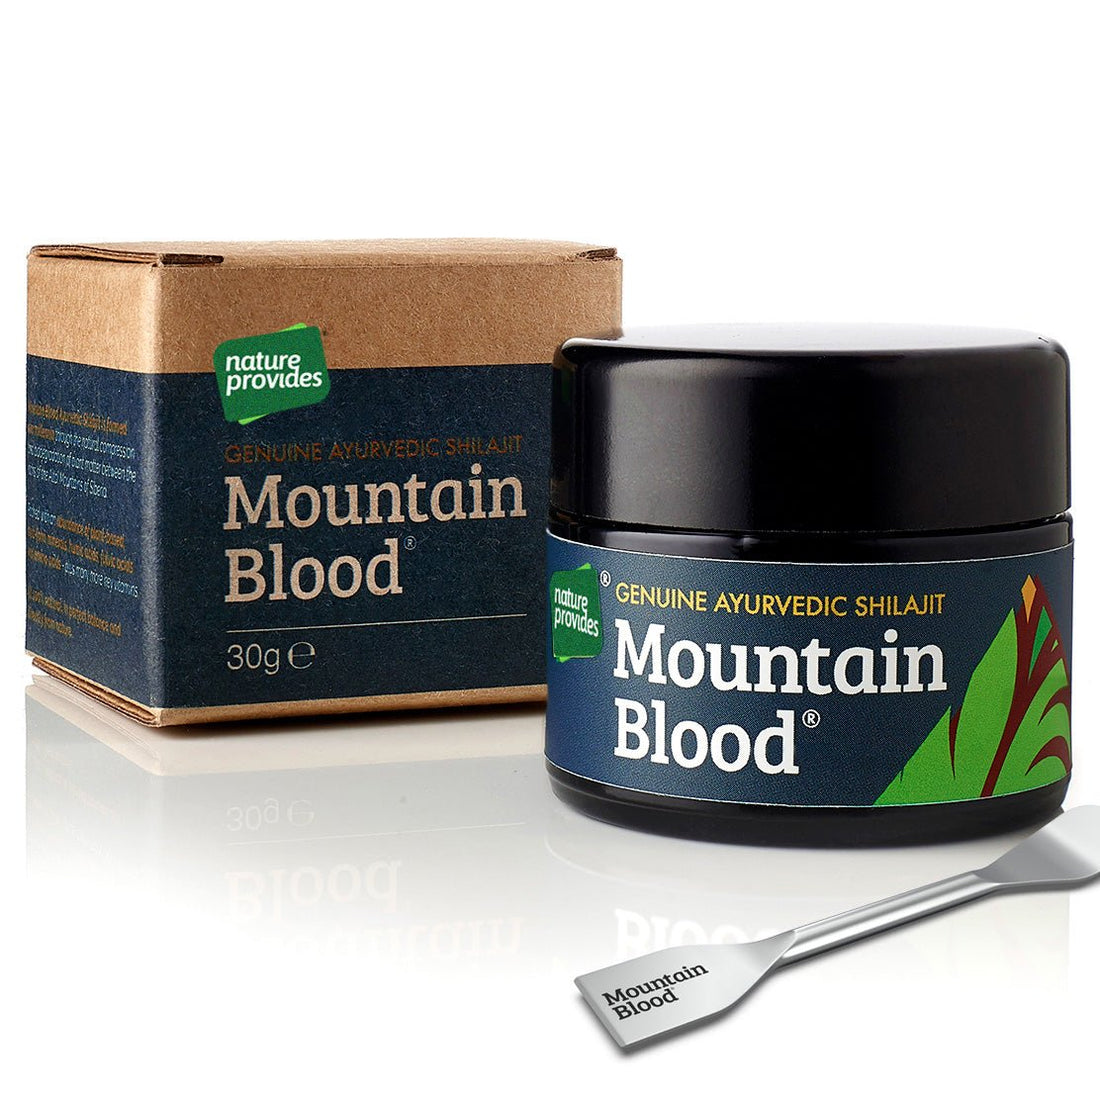 Mountain Blood® Premium Ayurvedic Shilajit - 30g - Nature Provides